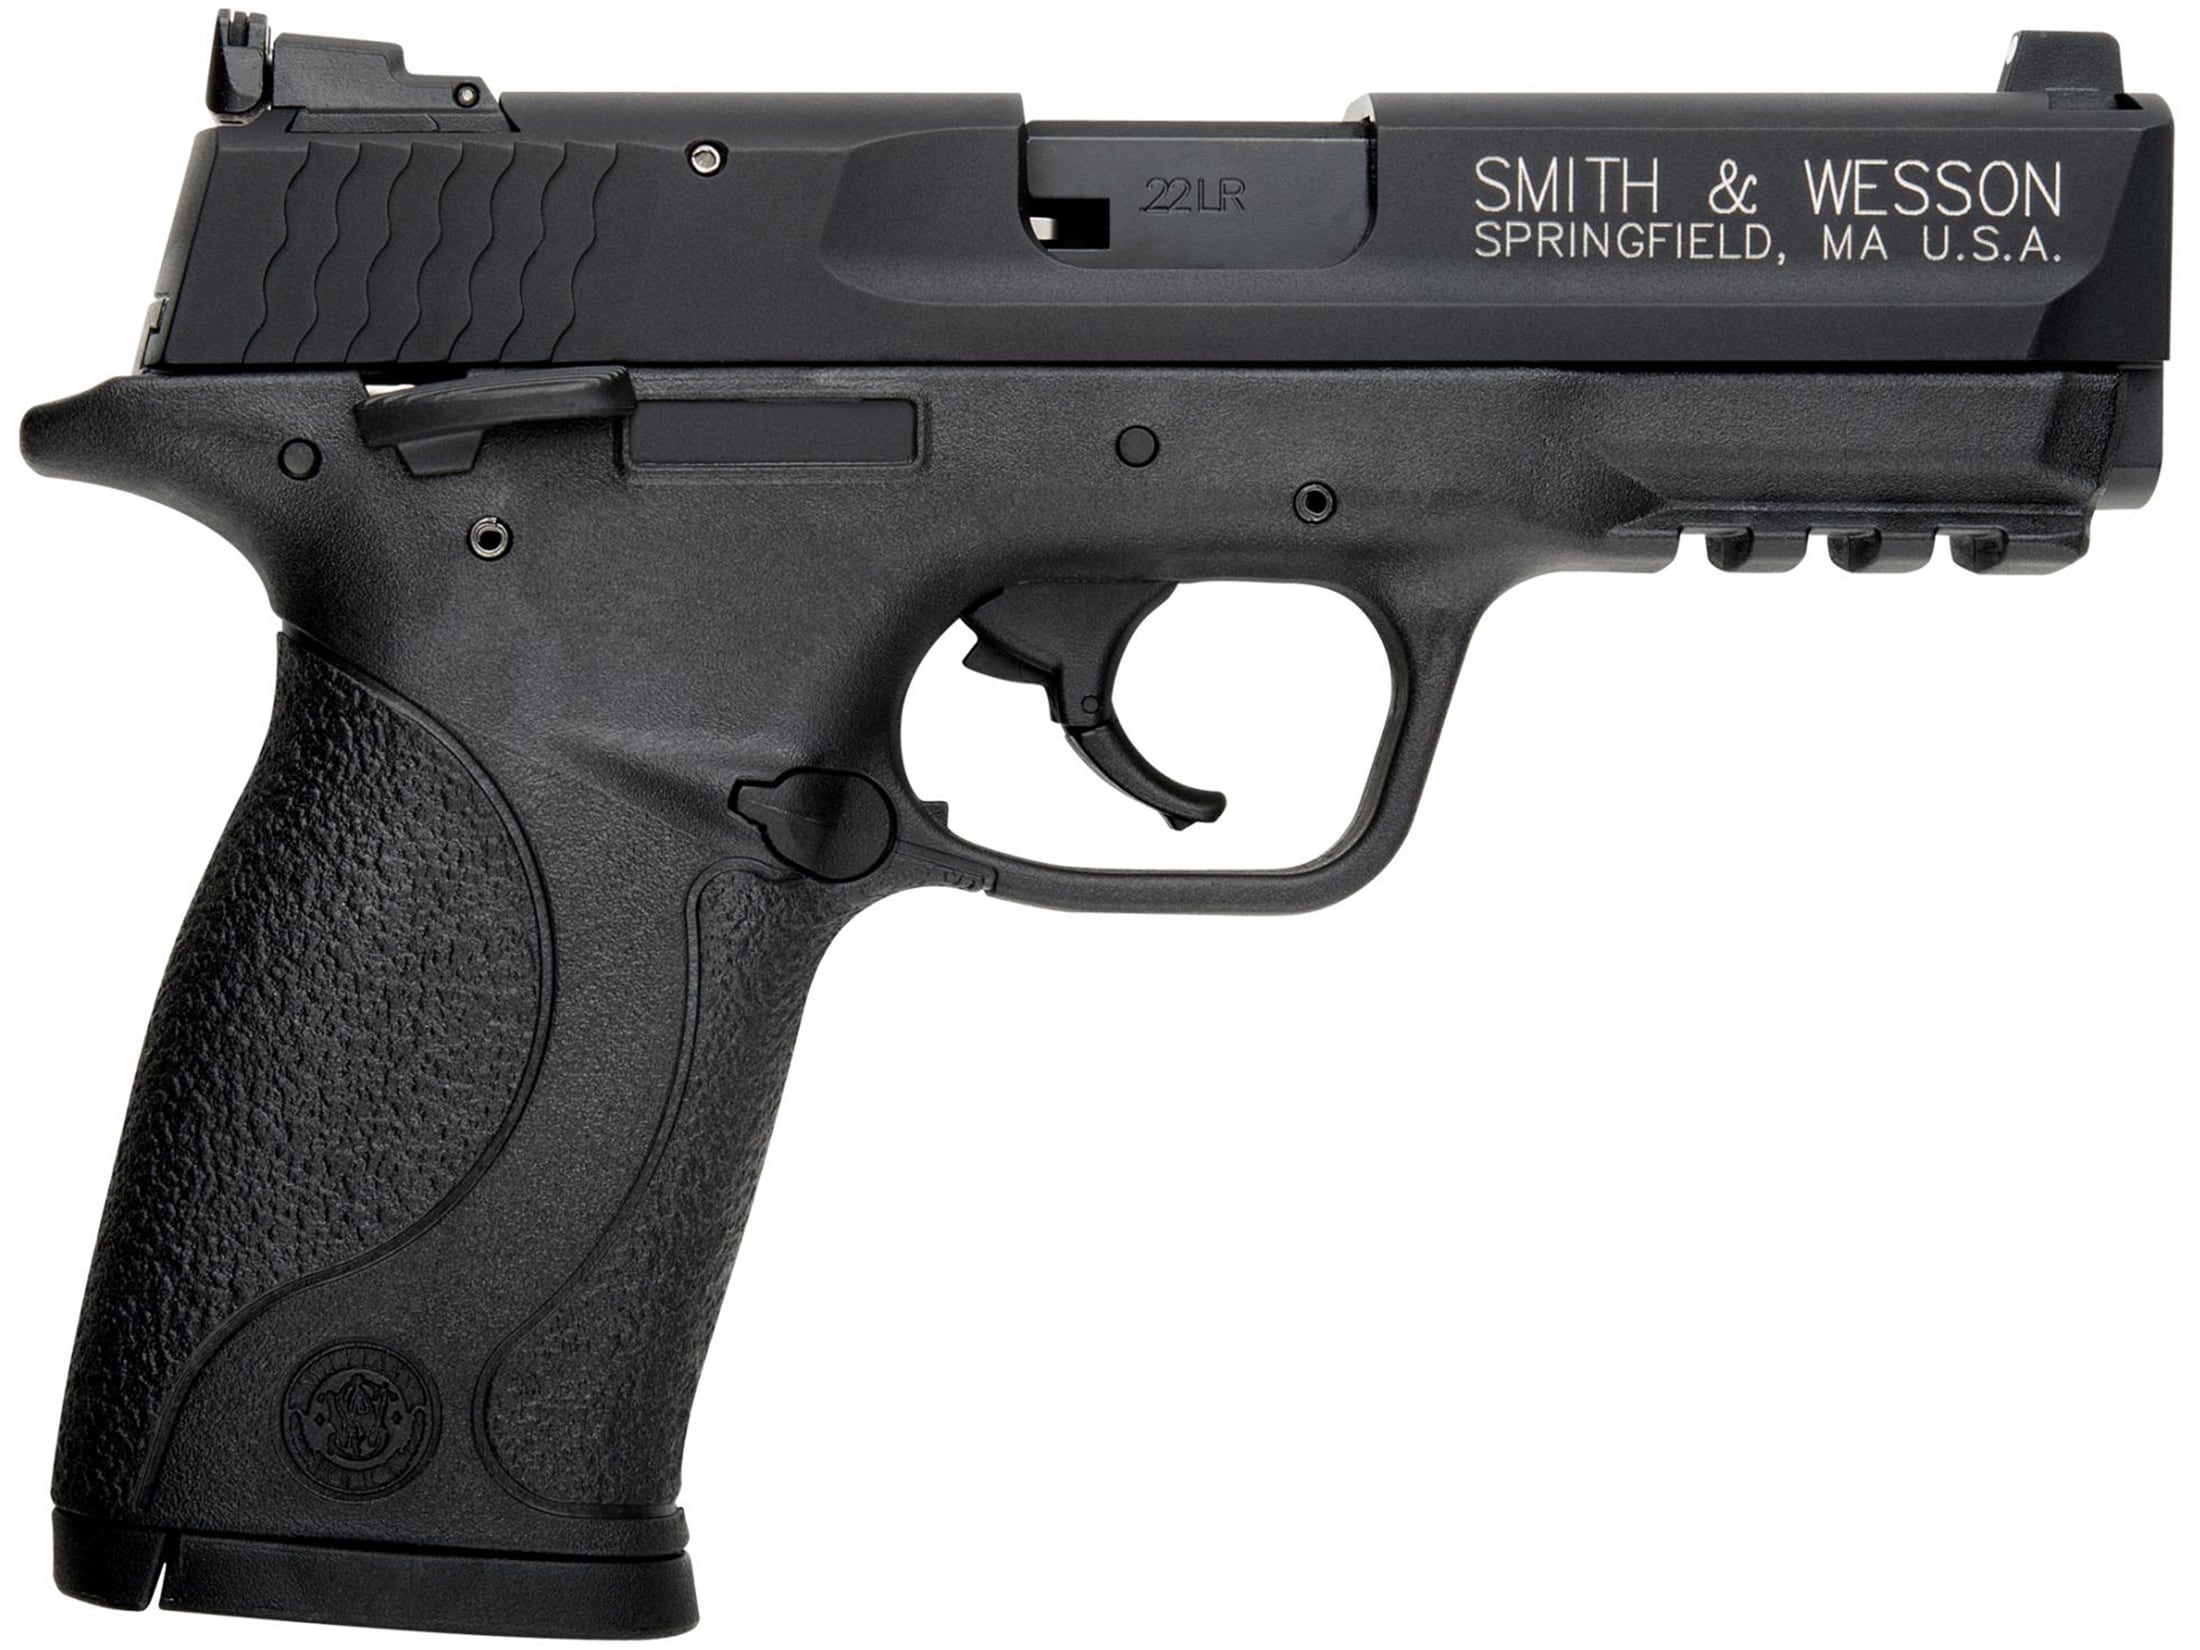 SMITH & WESSON M&P PATCH FOR VEST SEW ON 2 X 3.5 SHIRT GUN CASE HAT JACKET